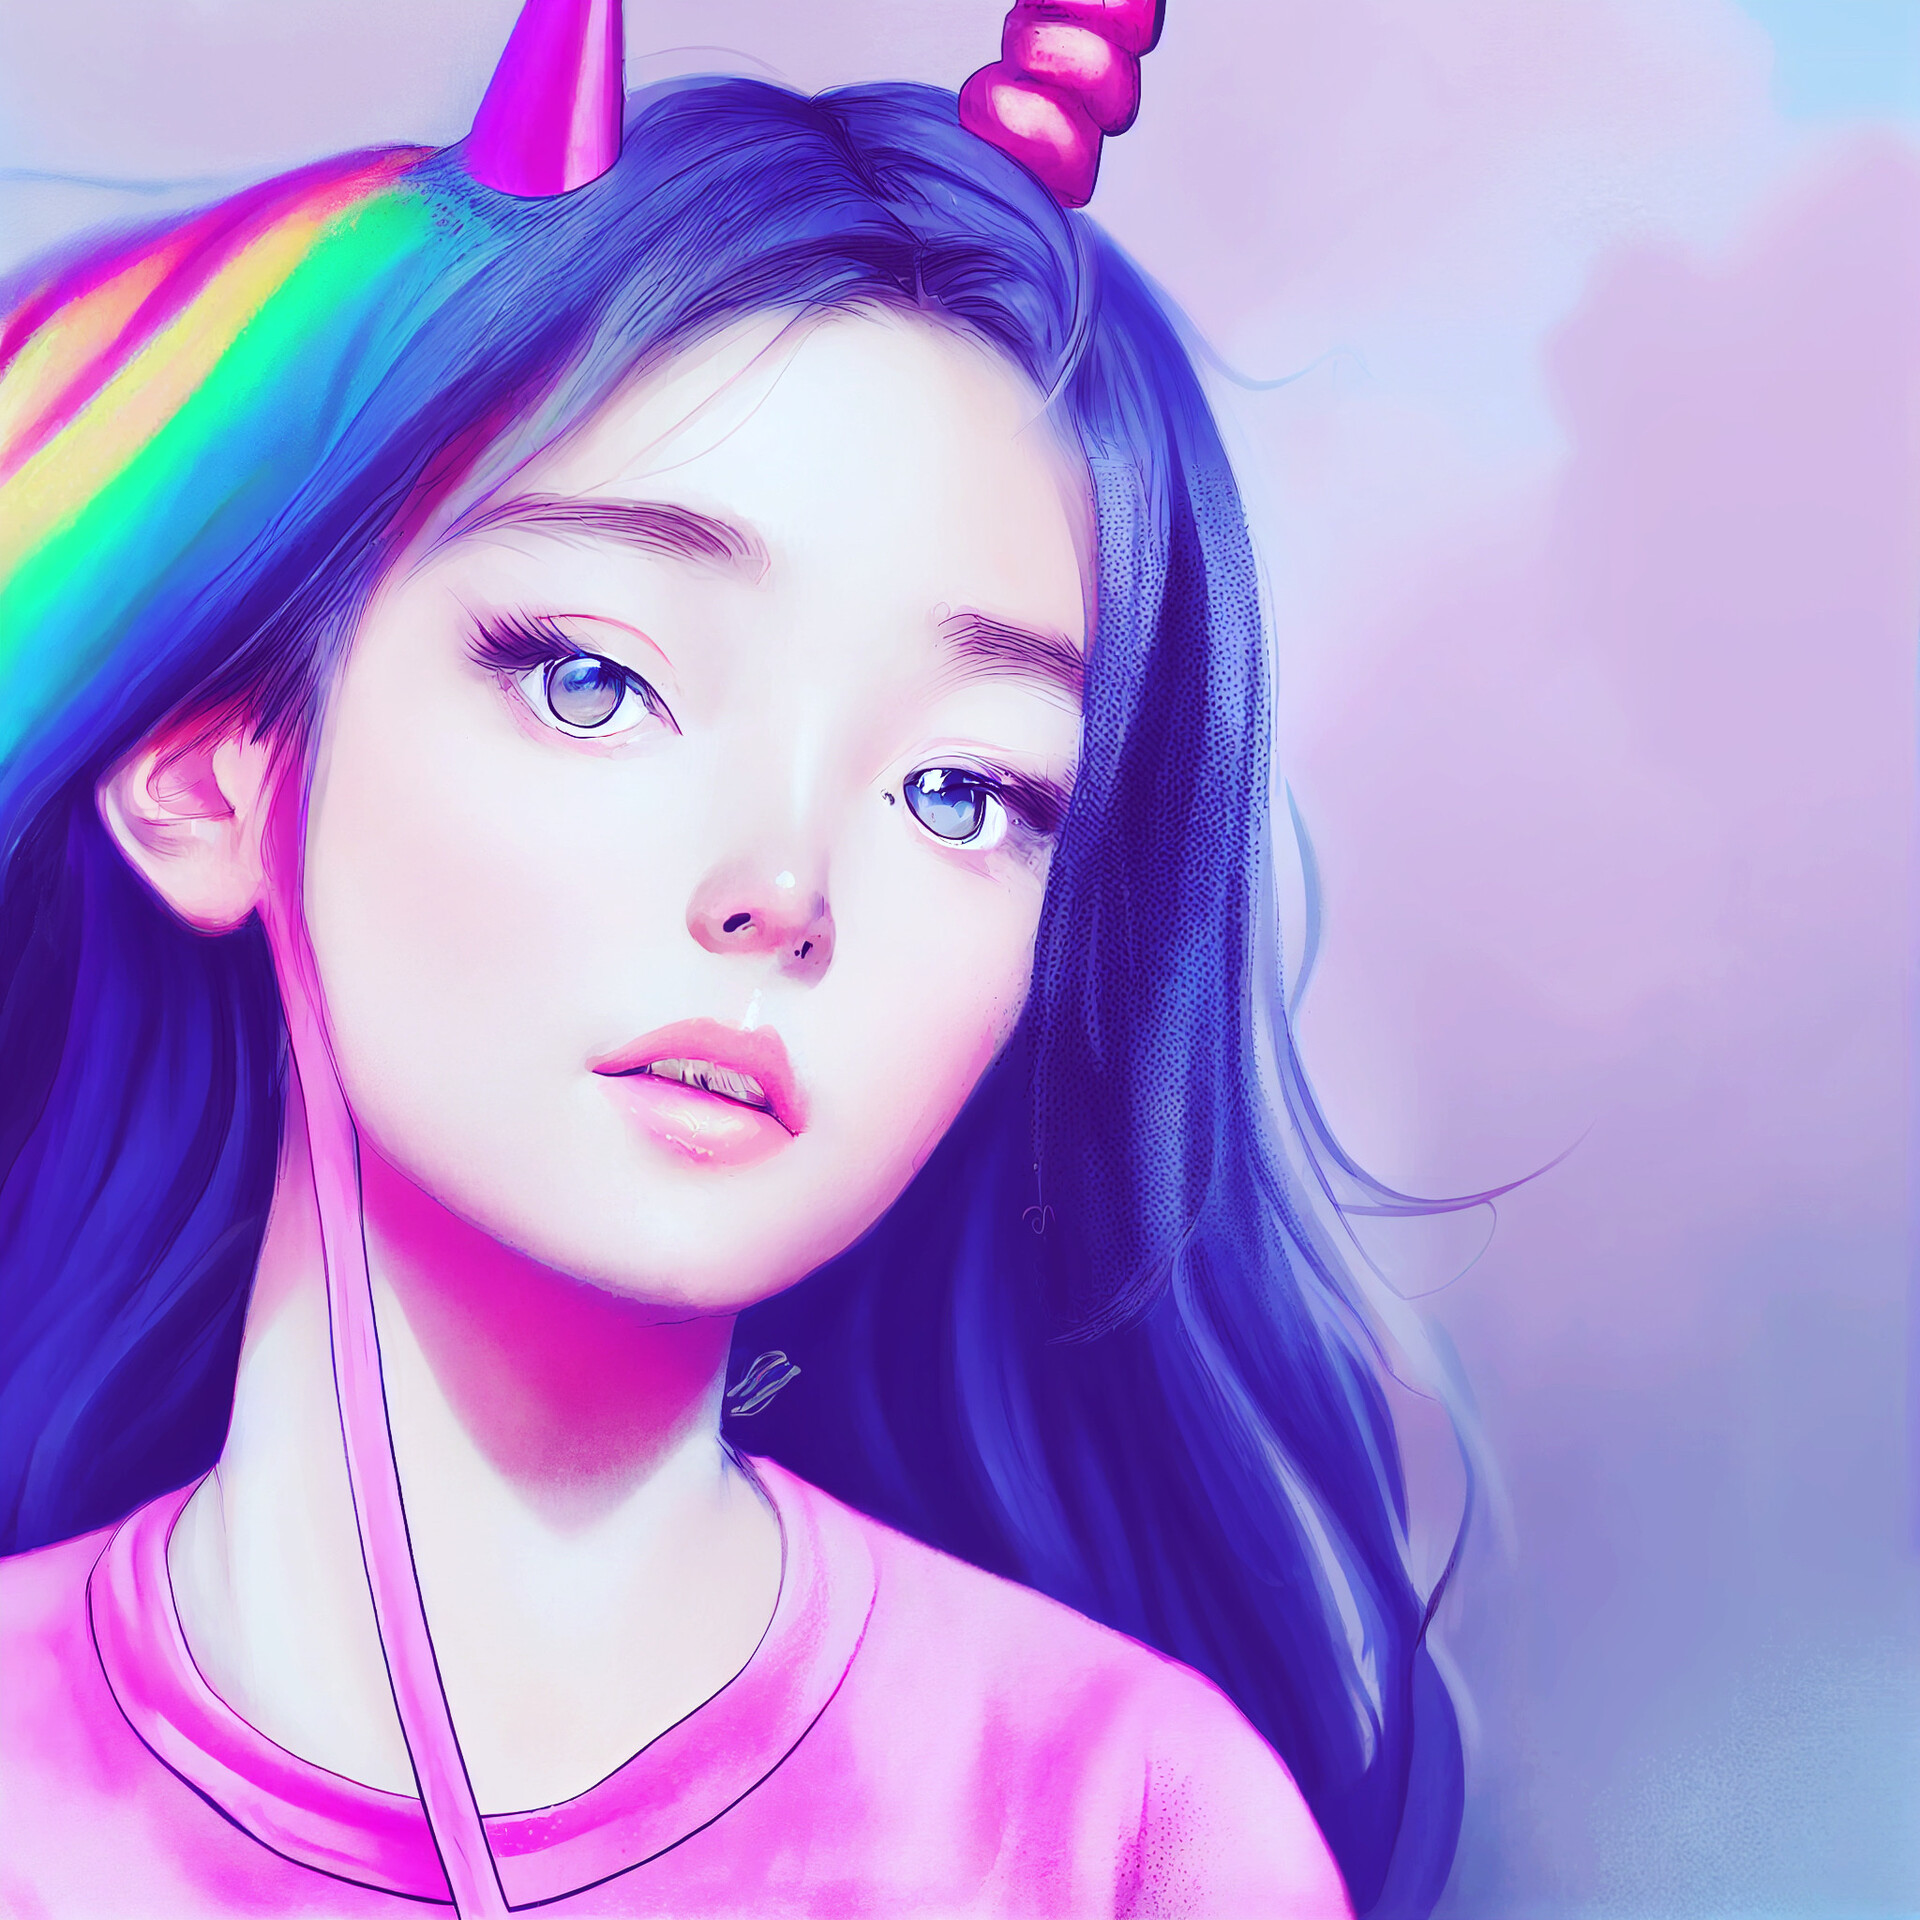 Wallpaper girl heterochromia unicorn toy anime art hd picture image